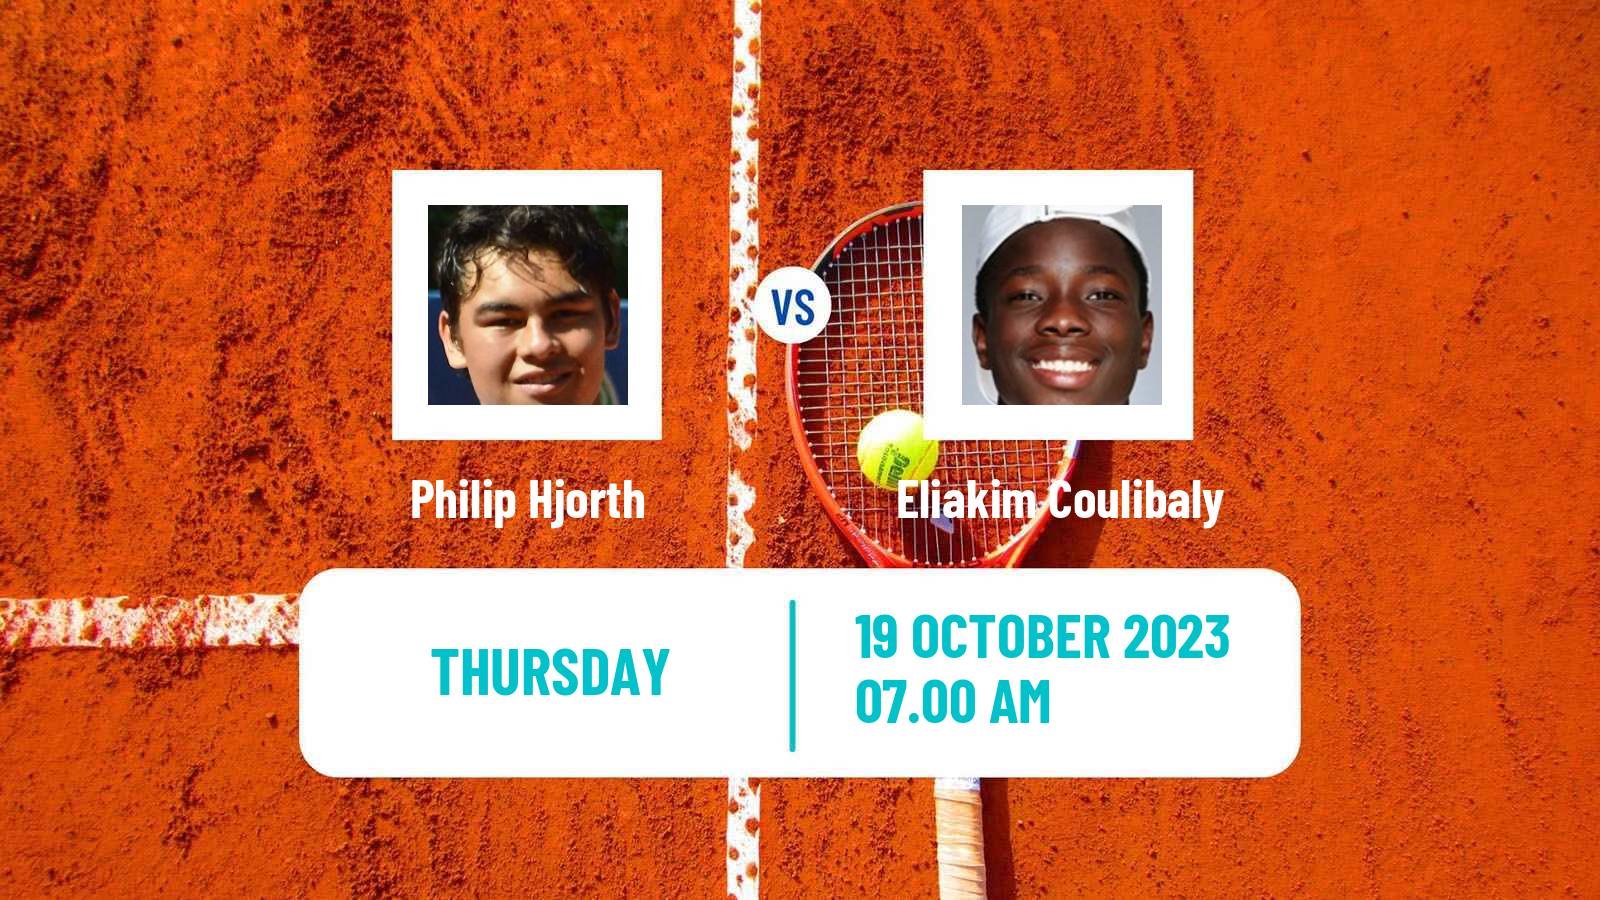 Tennis ITF M25 Tavira 2 Men Philip Hjorth - Eliakim Coulibaly